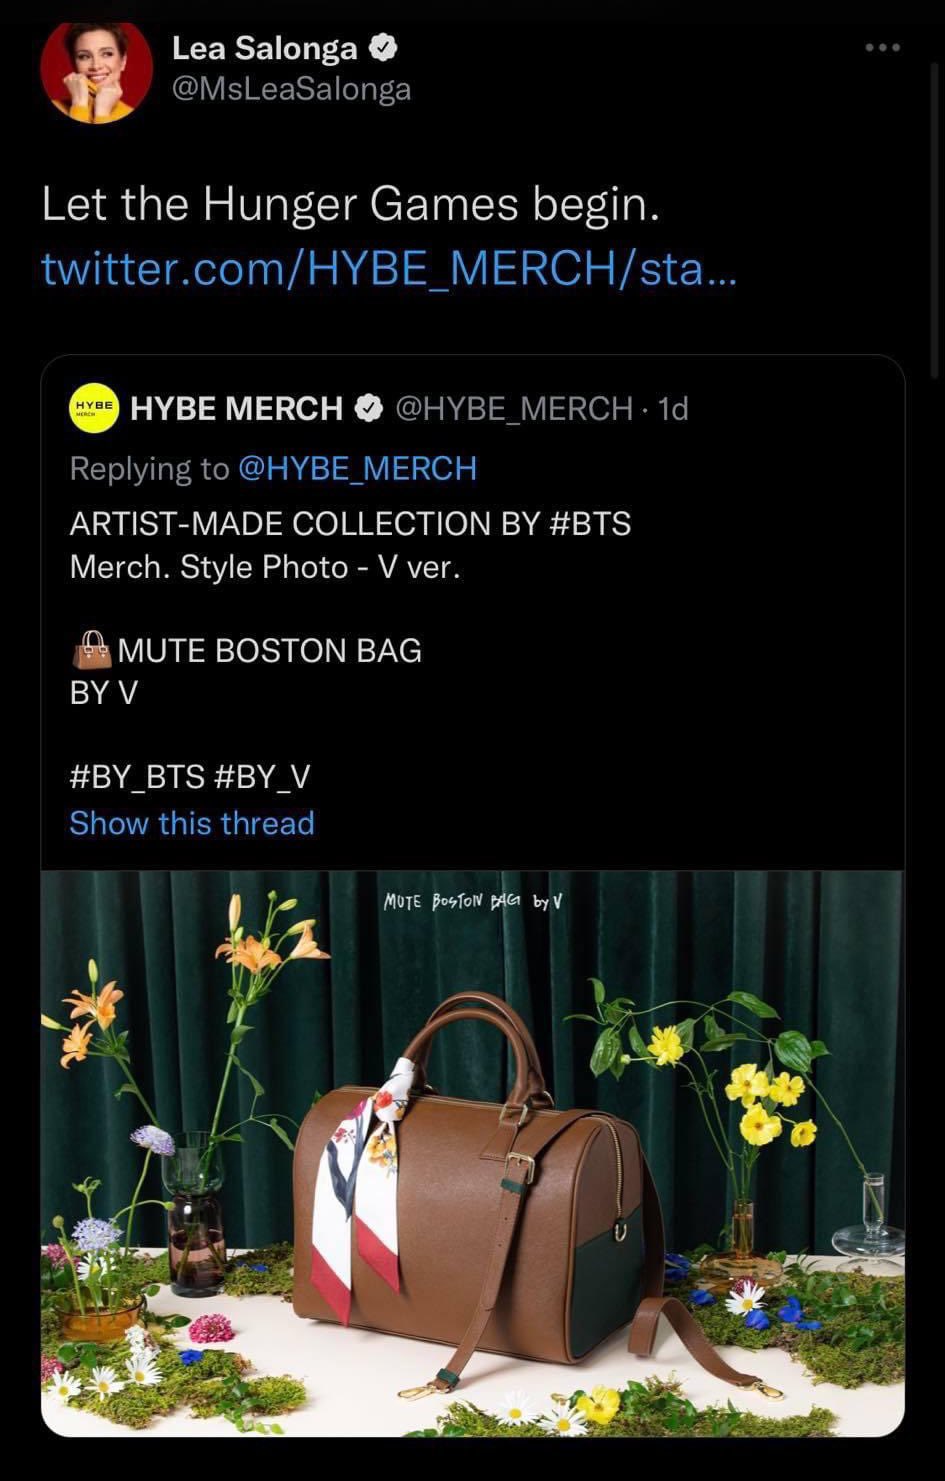 Boston bag designed by V of BTS, already in high demand